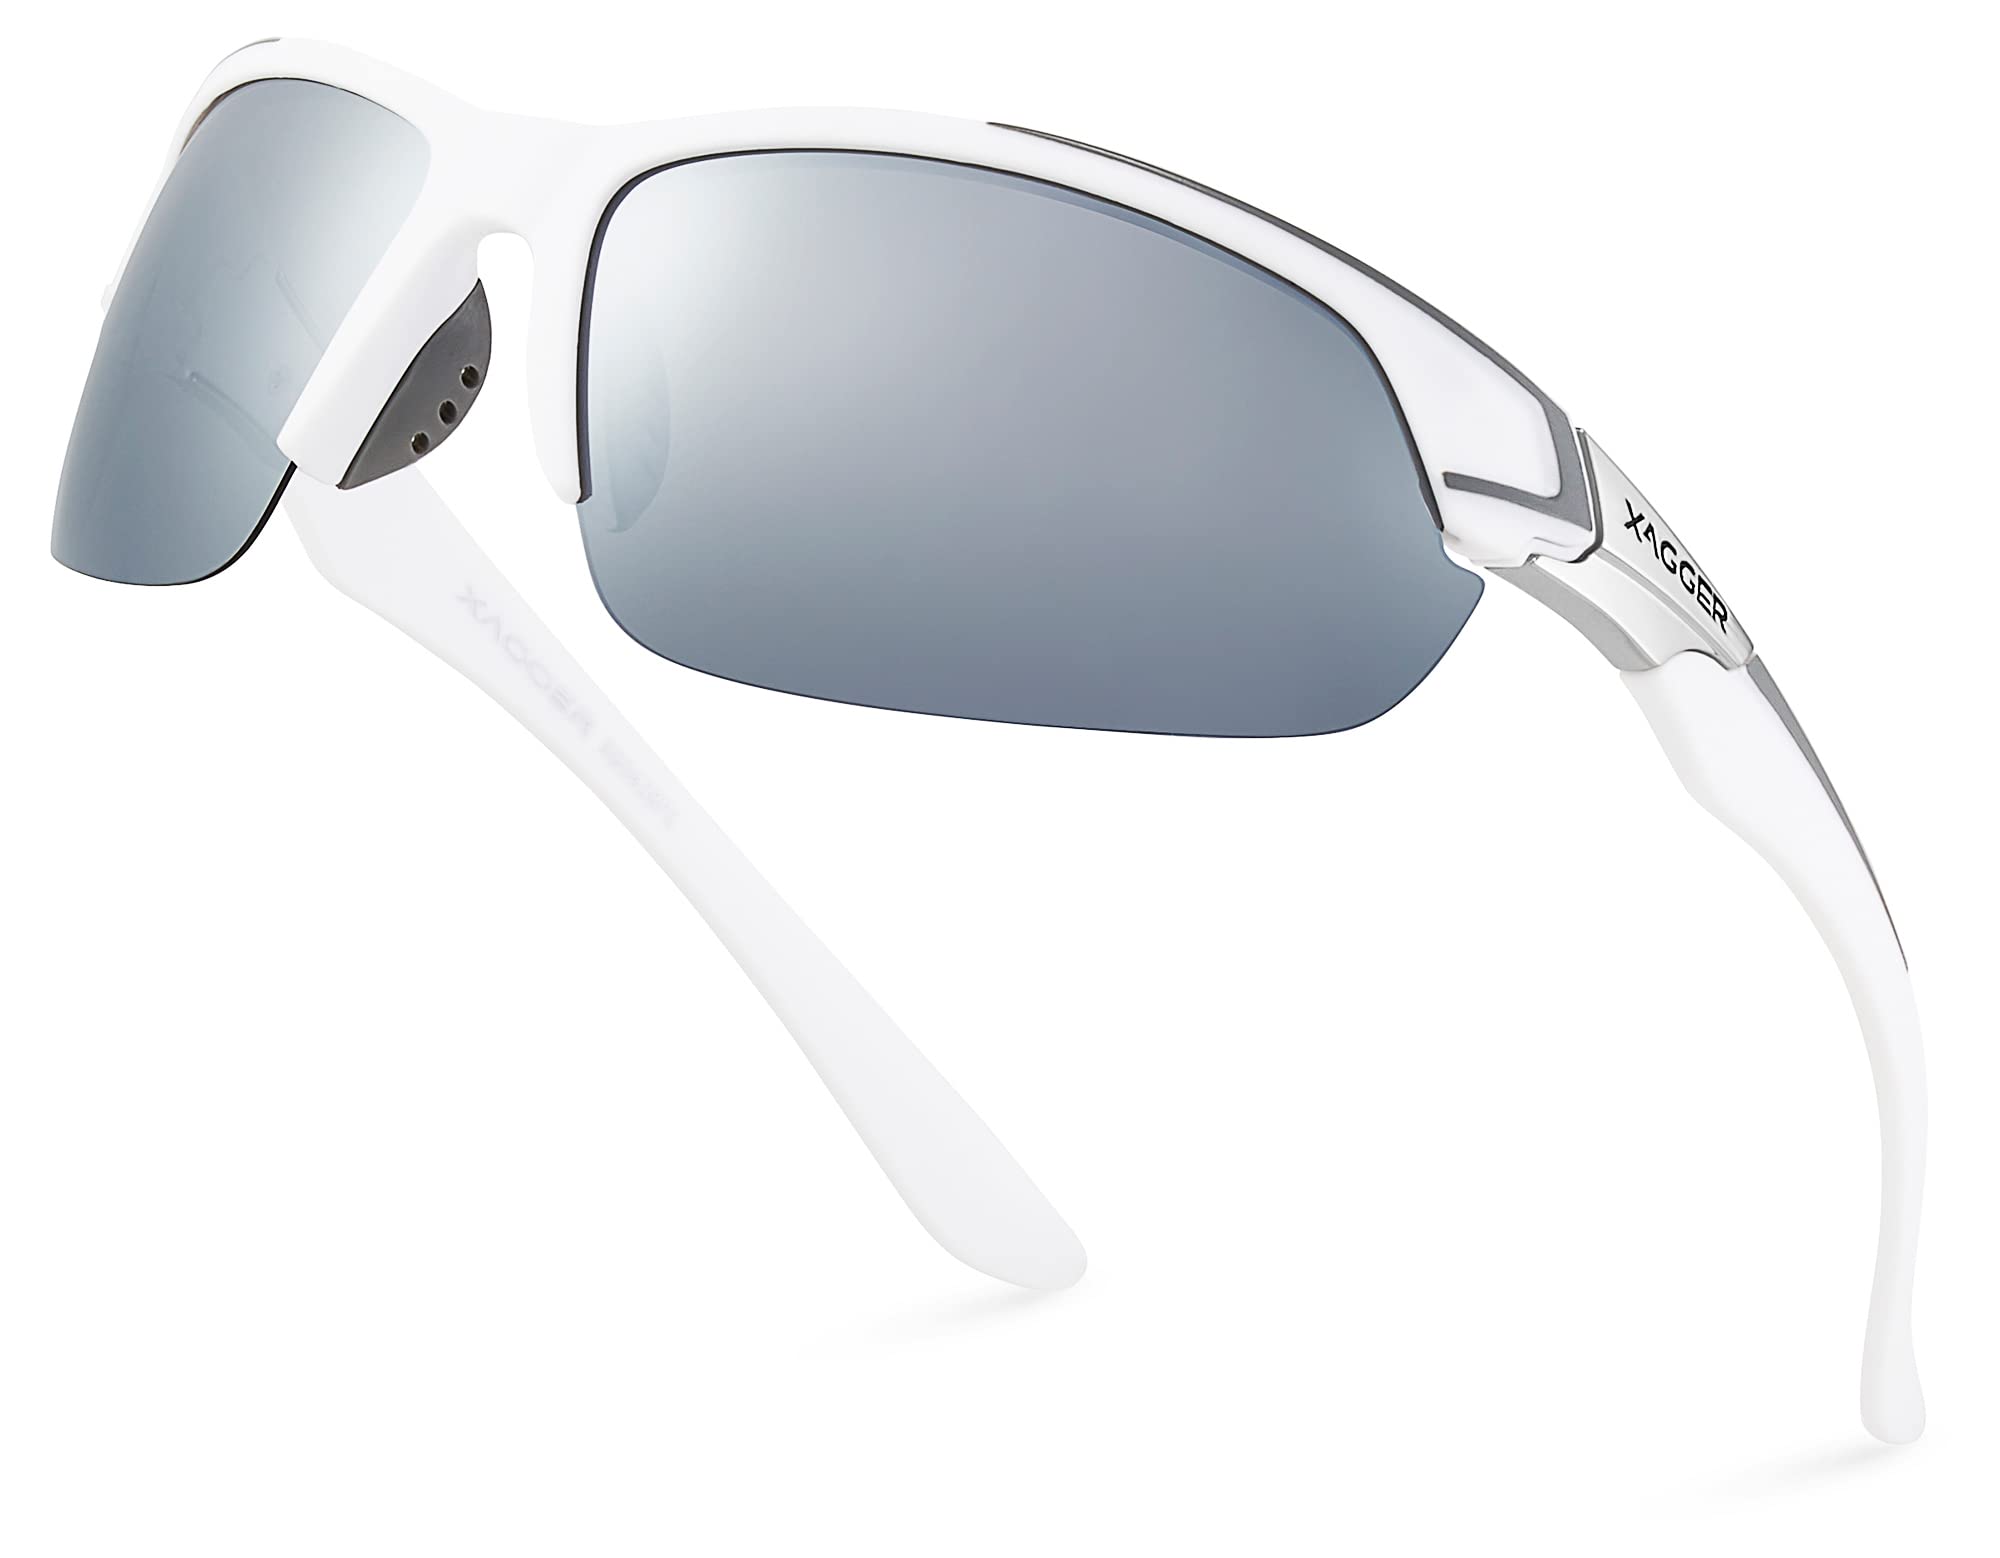  Xagger Polarized Sports Sunglasses for Men Women